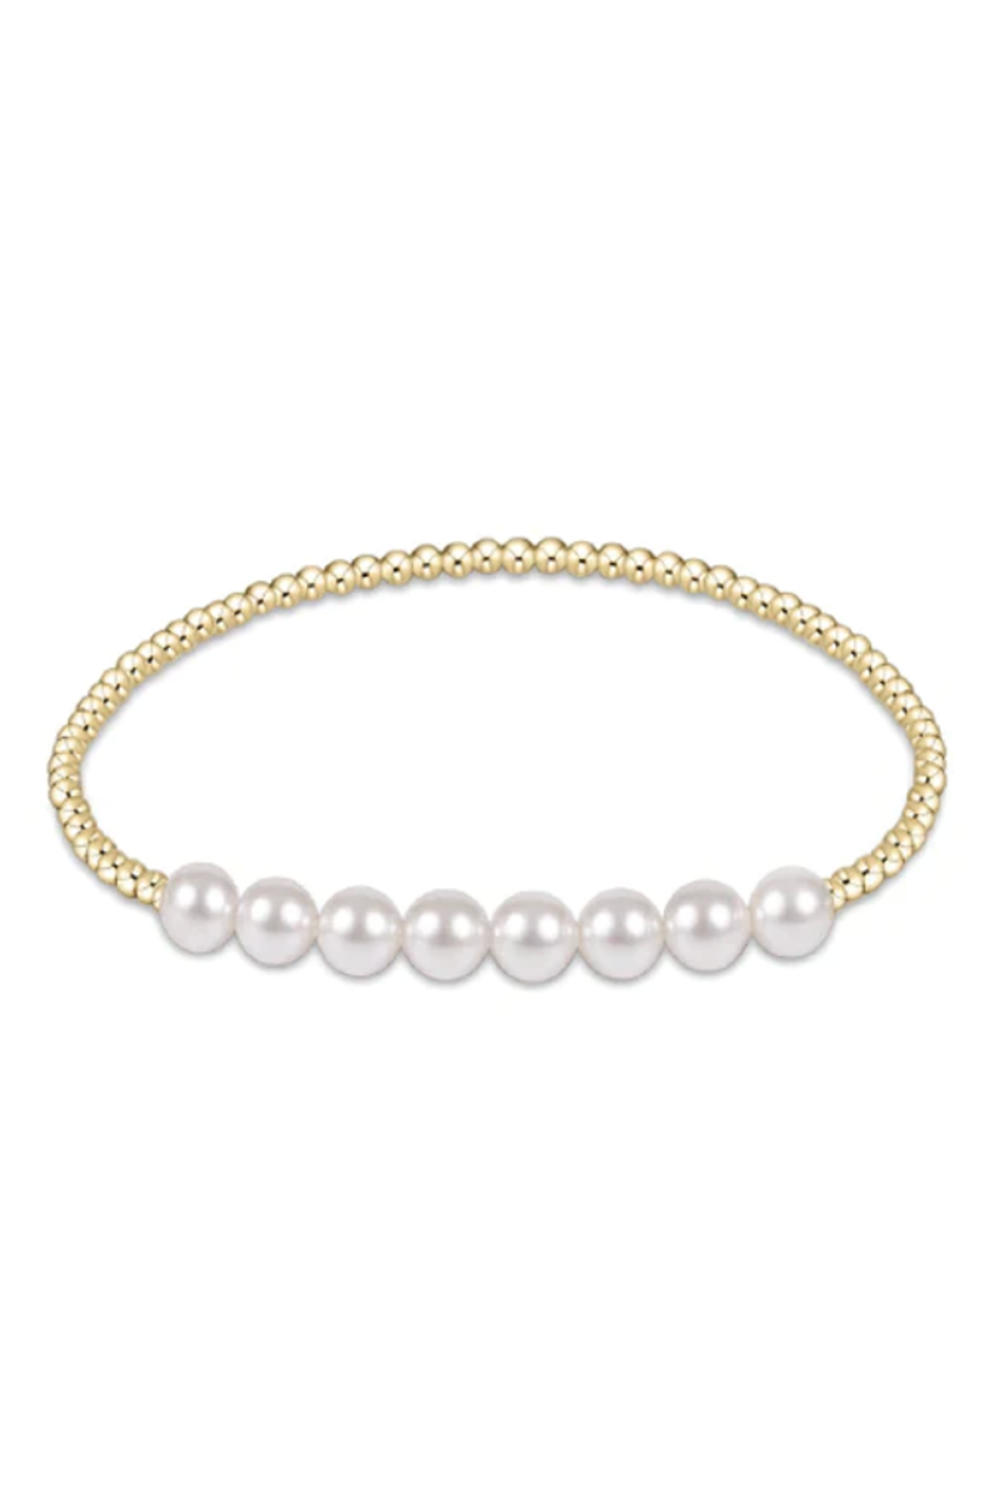 EN Classic Beaded Bliss Bracelet - Gold + Pearl